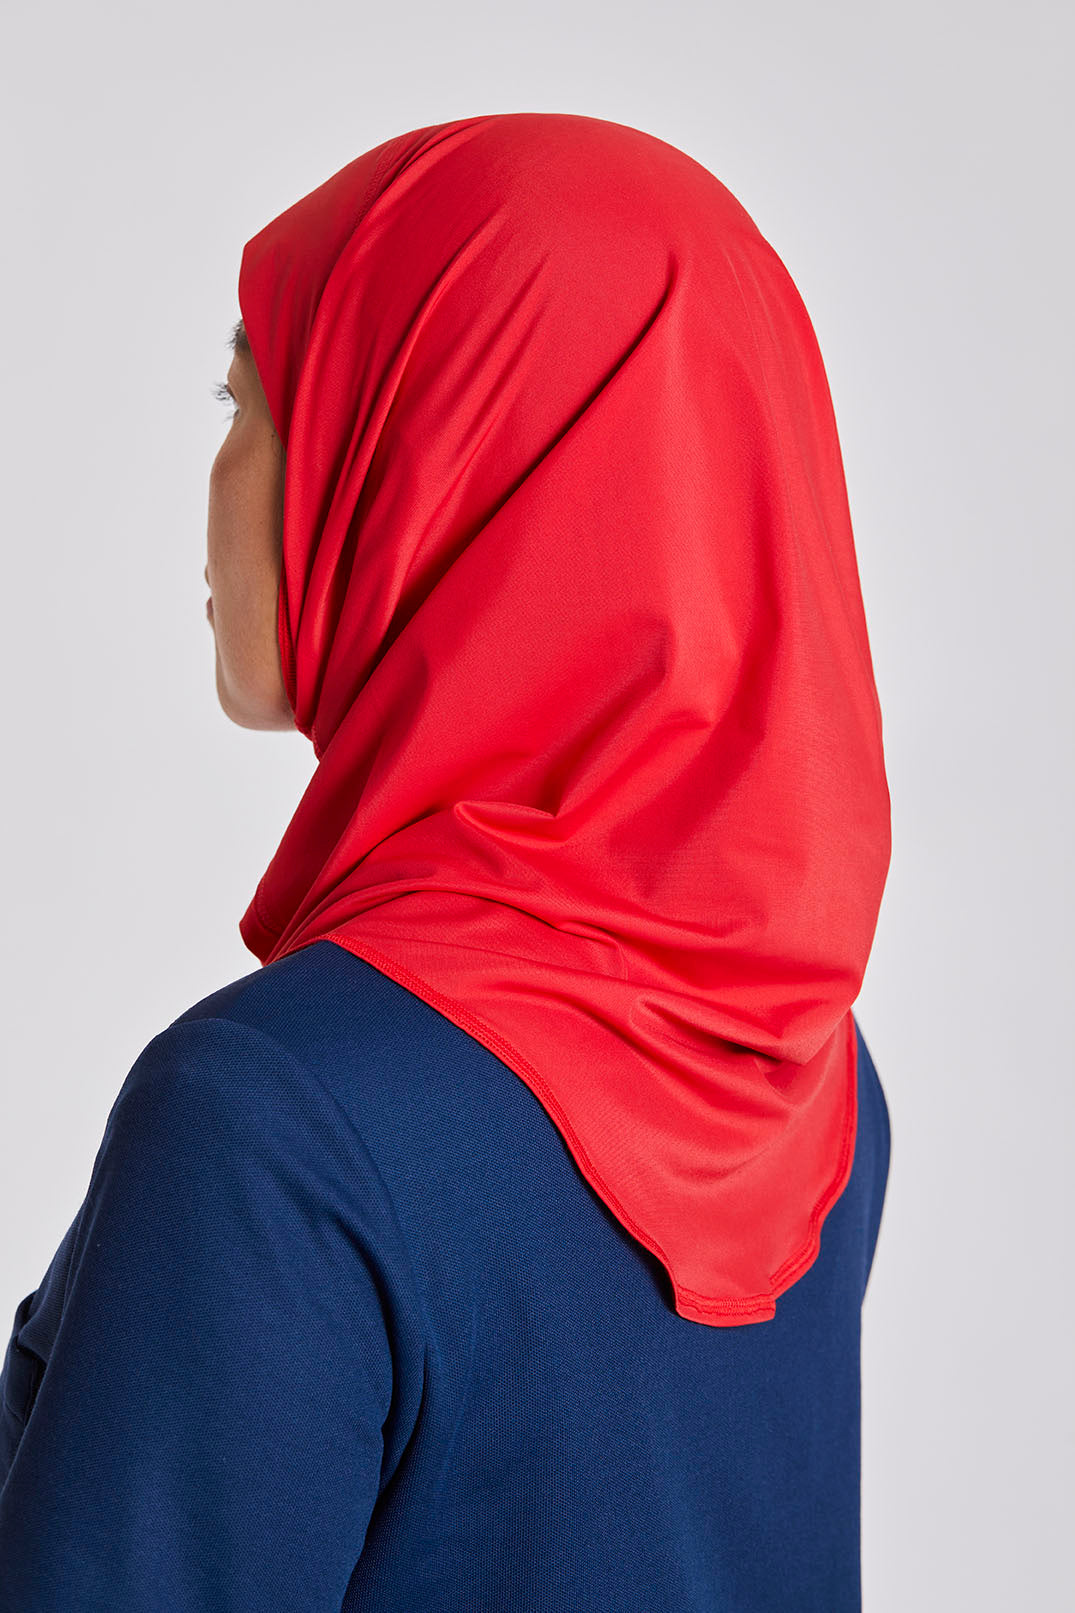 Stretch Hijab – Red